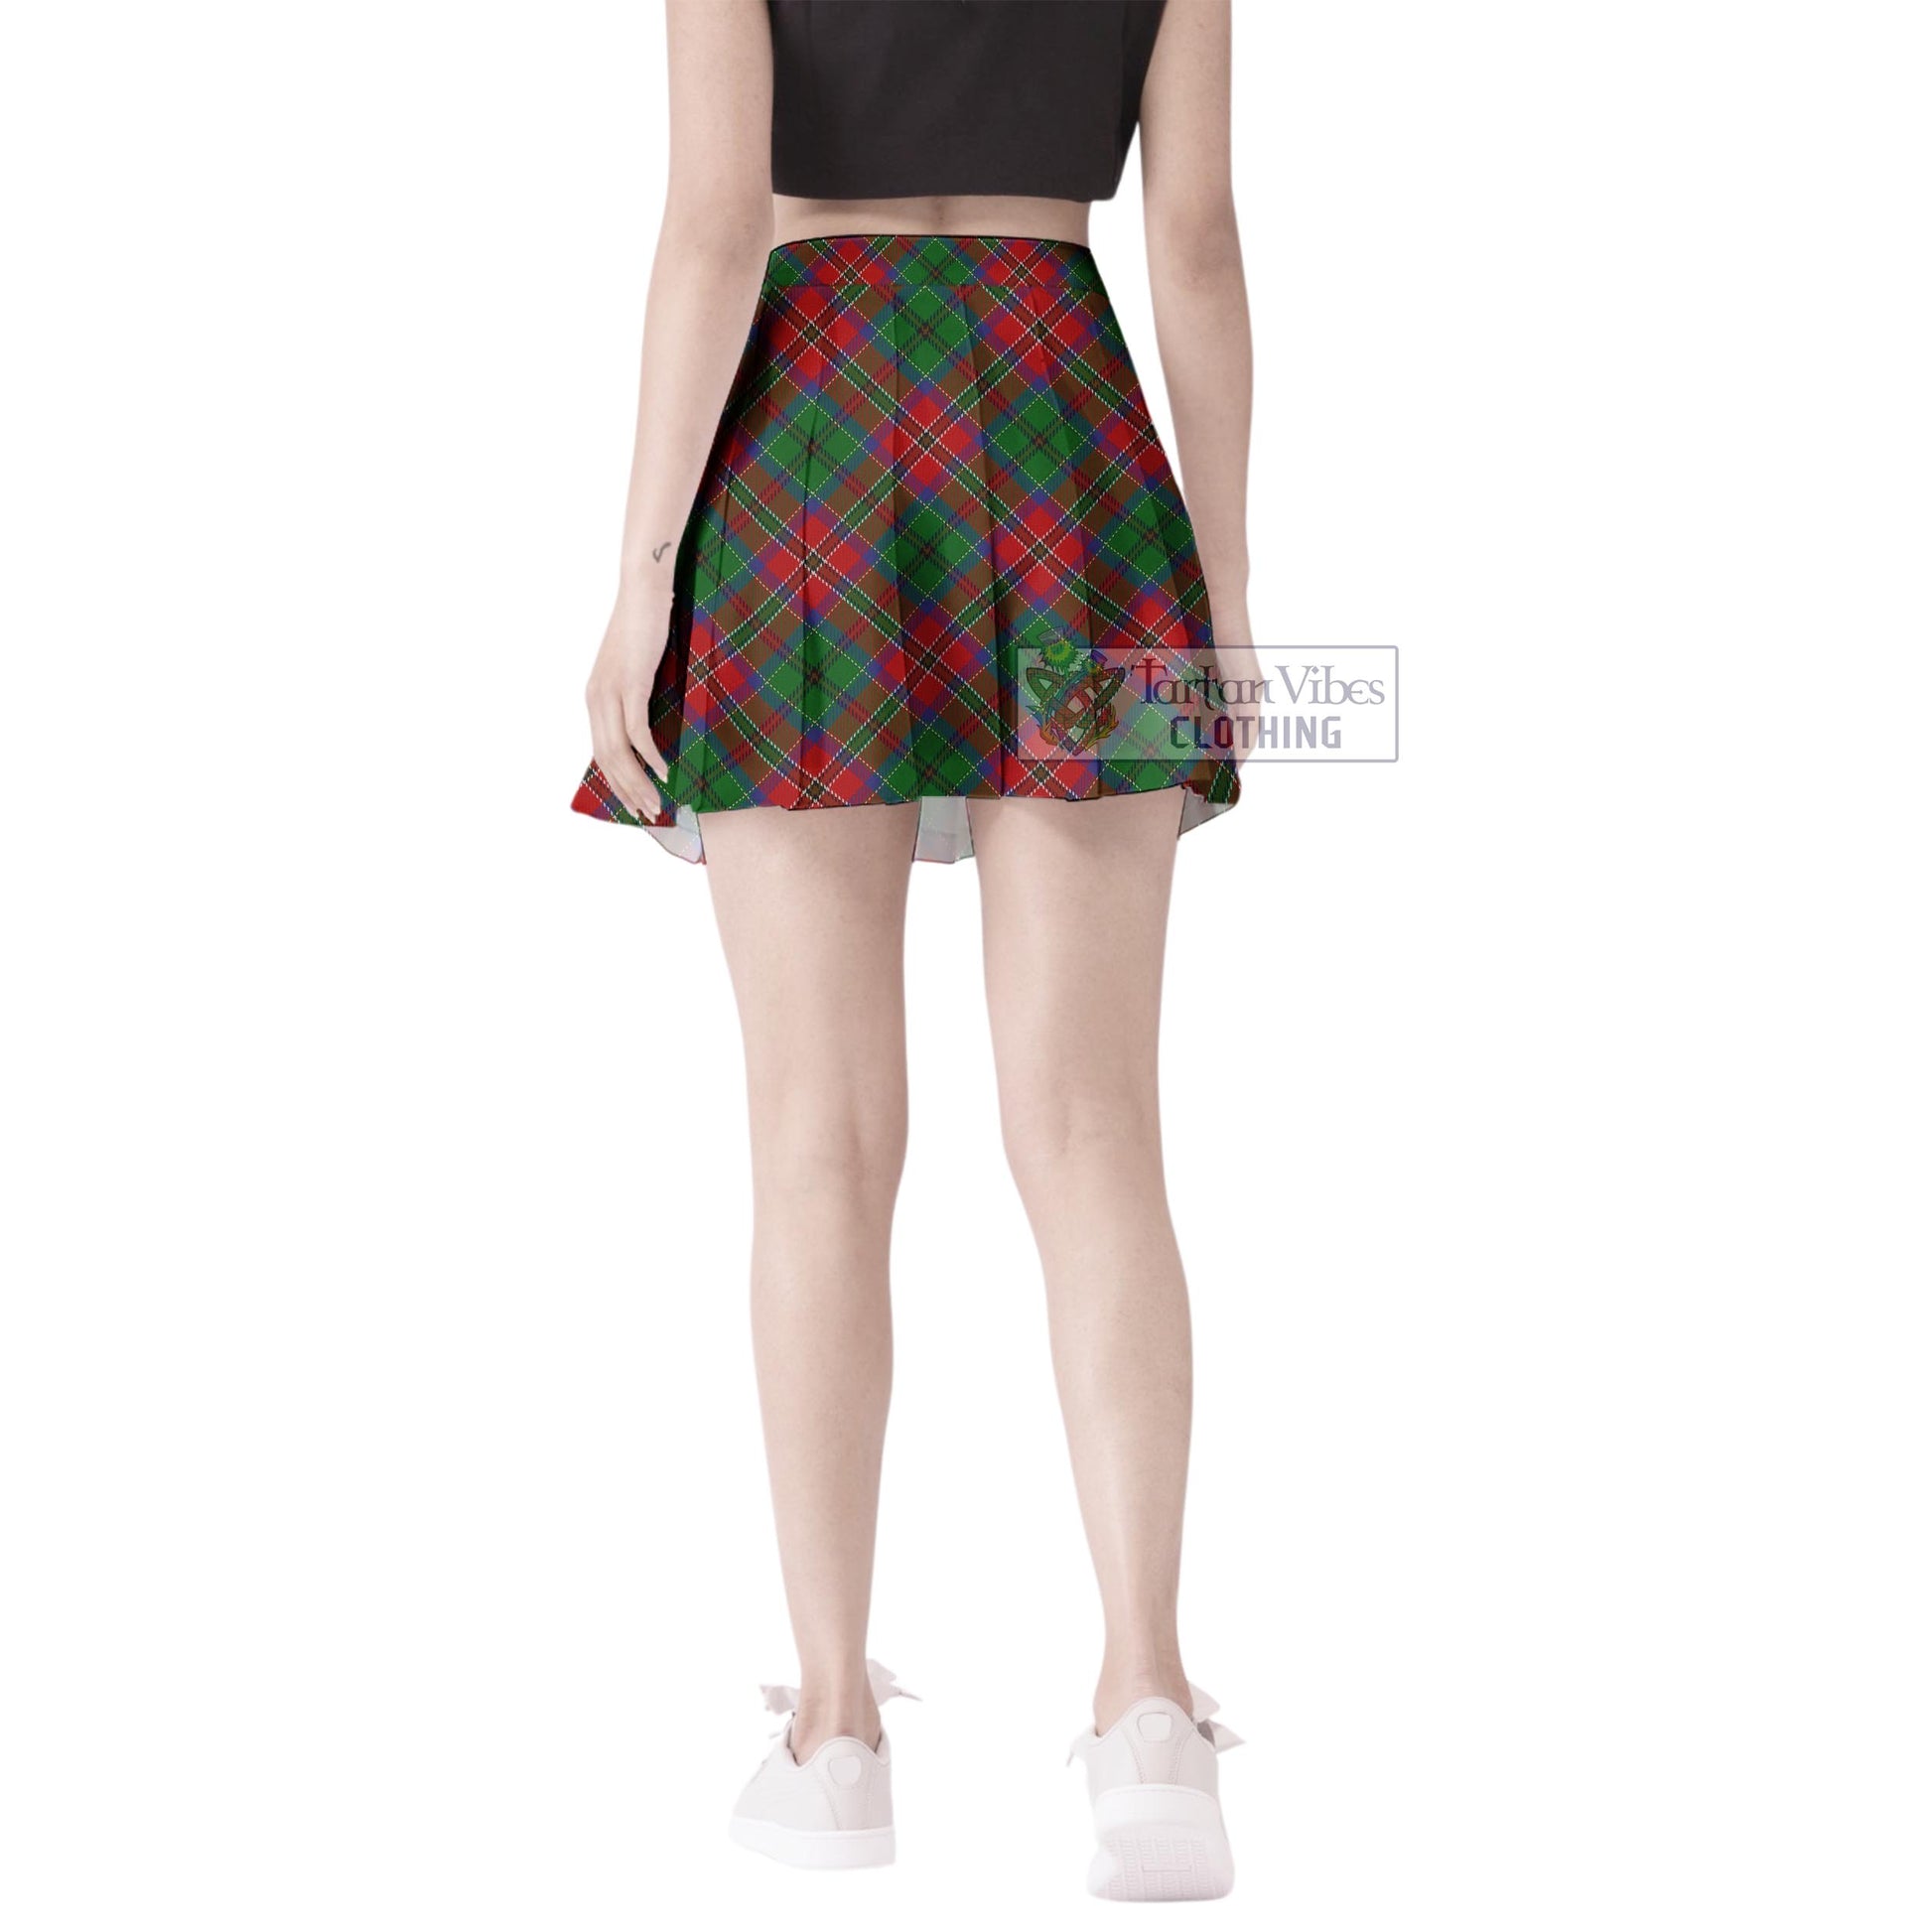 Tartan Vibes Clothing MacCulloch Tartan Women's Plated Mini Skirt